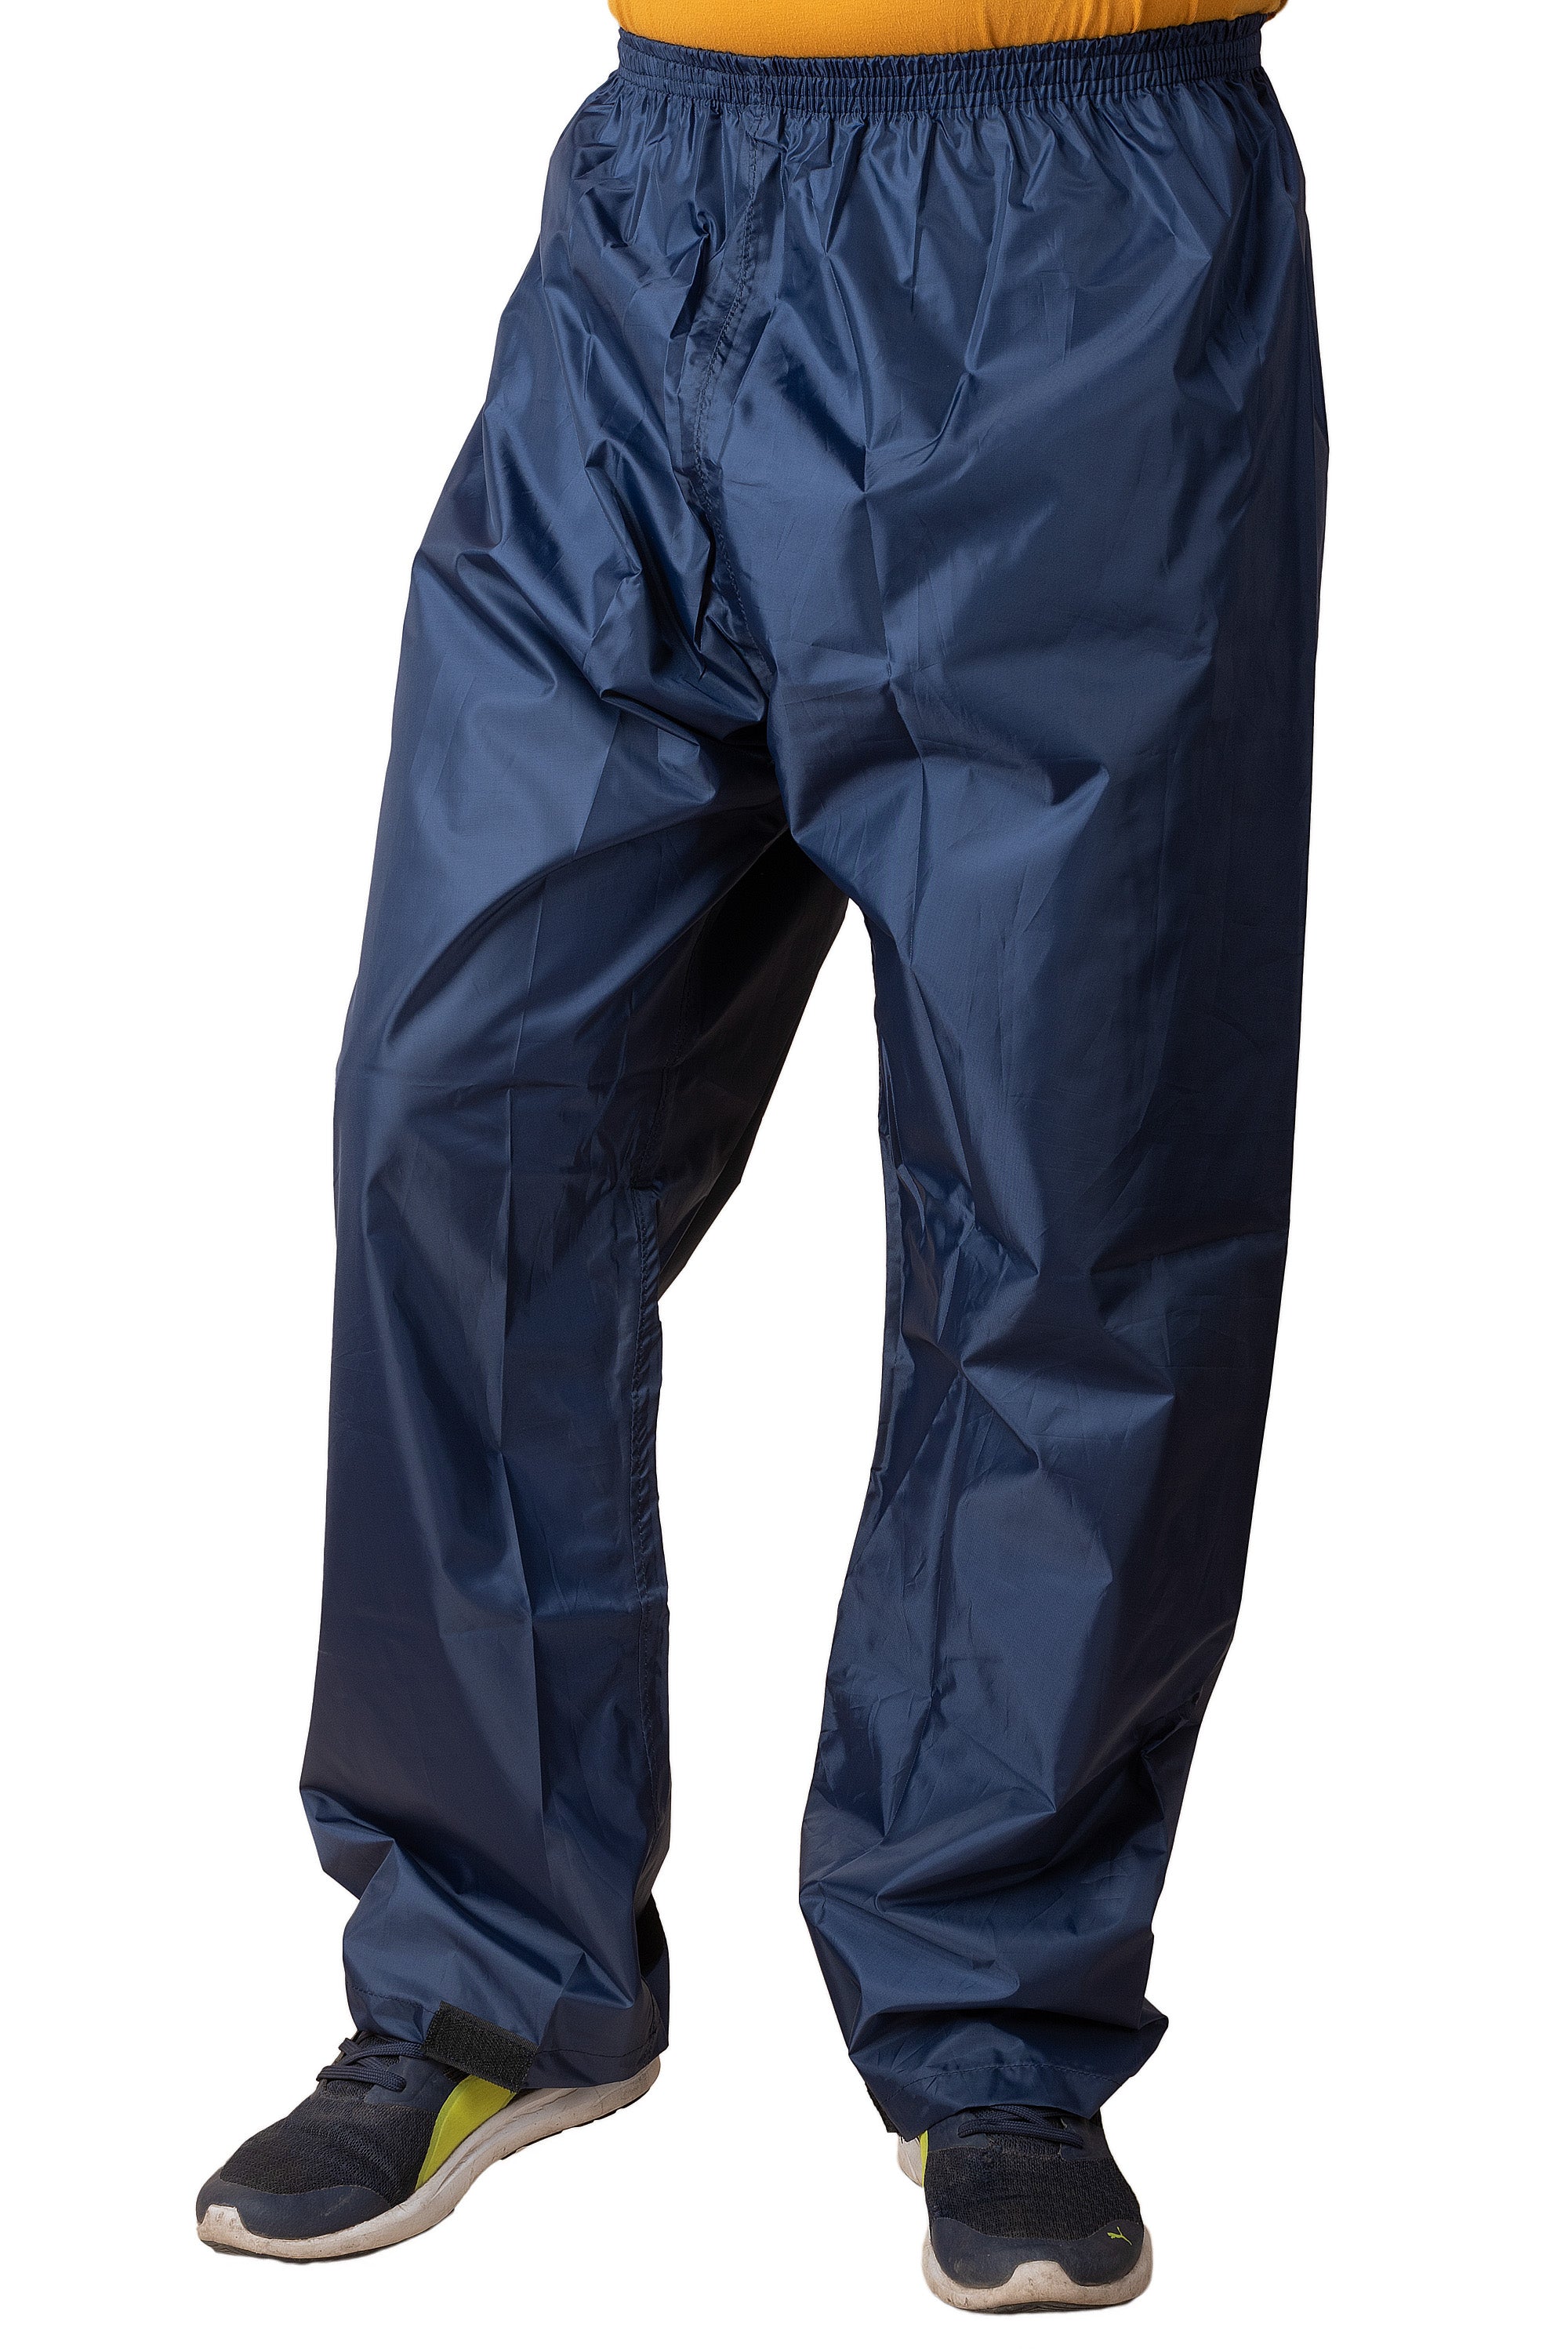 The Dry Cape Senator - Waterproof Raincoat for Men | Bike Riding Essential | Adjustable Hood & Extra Backpack Space | Best Branded Rain Gear